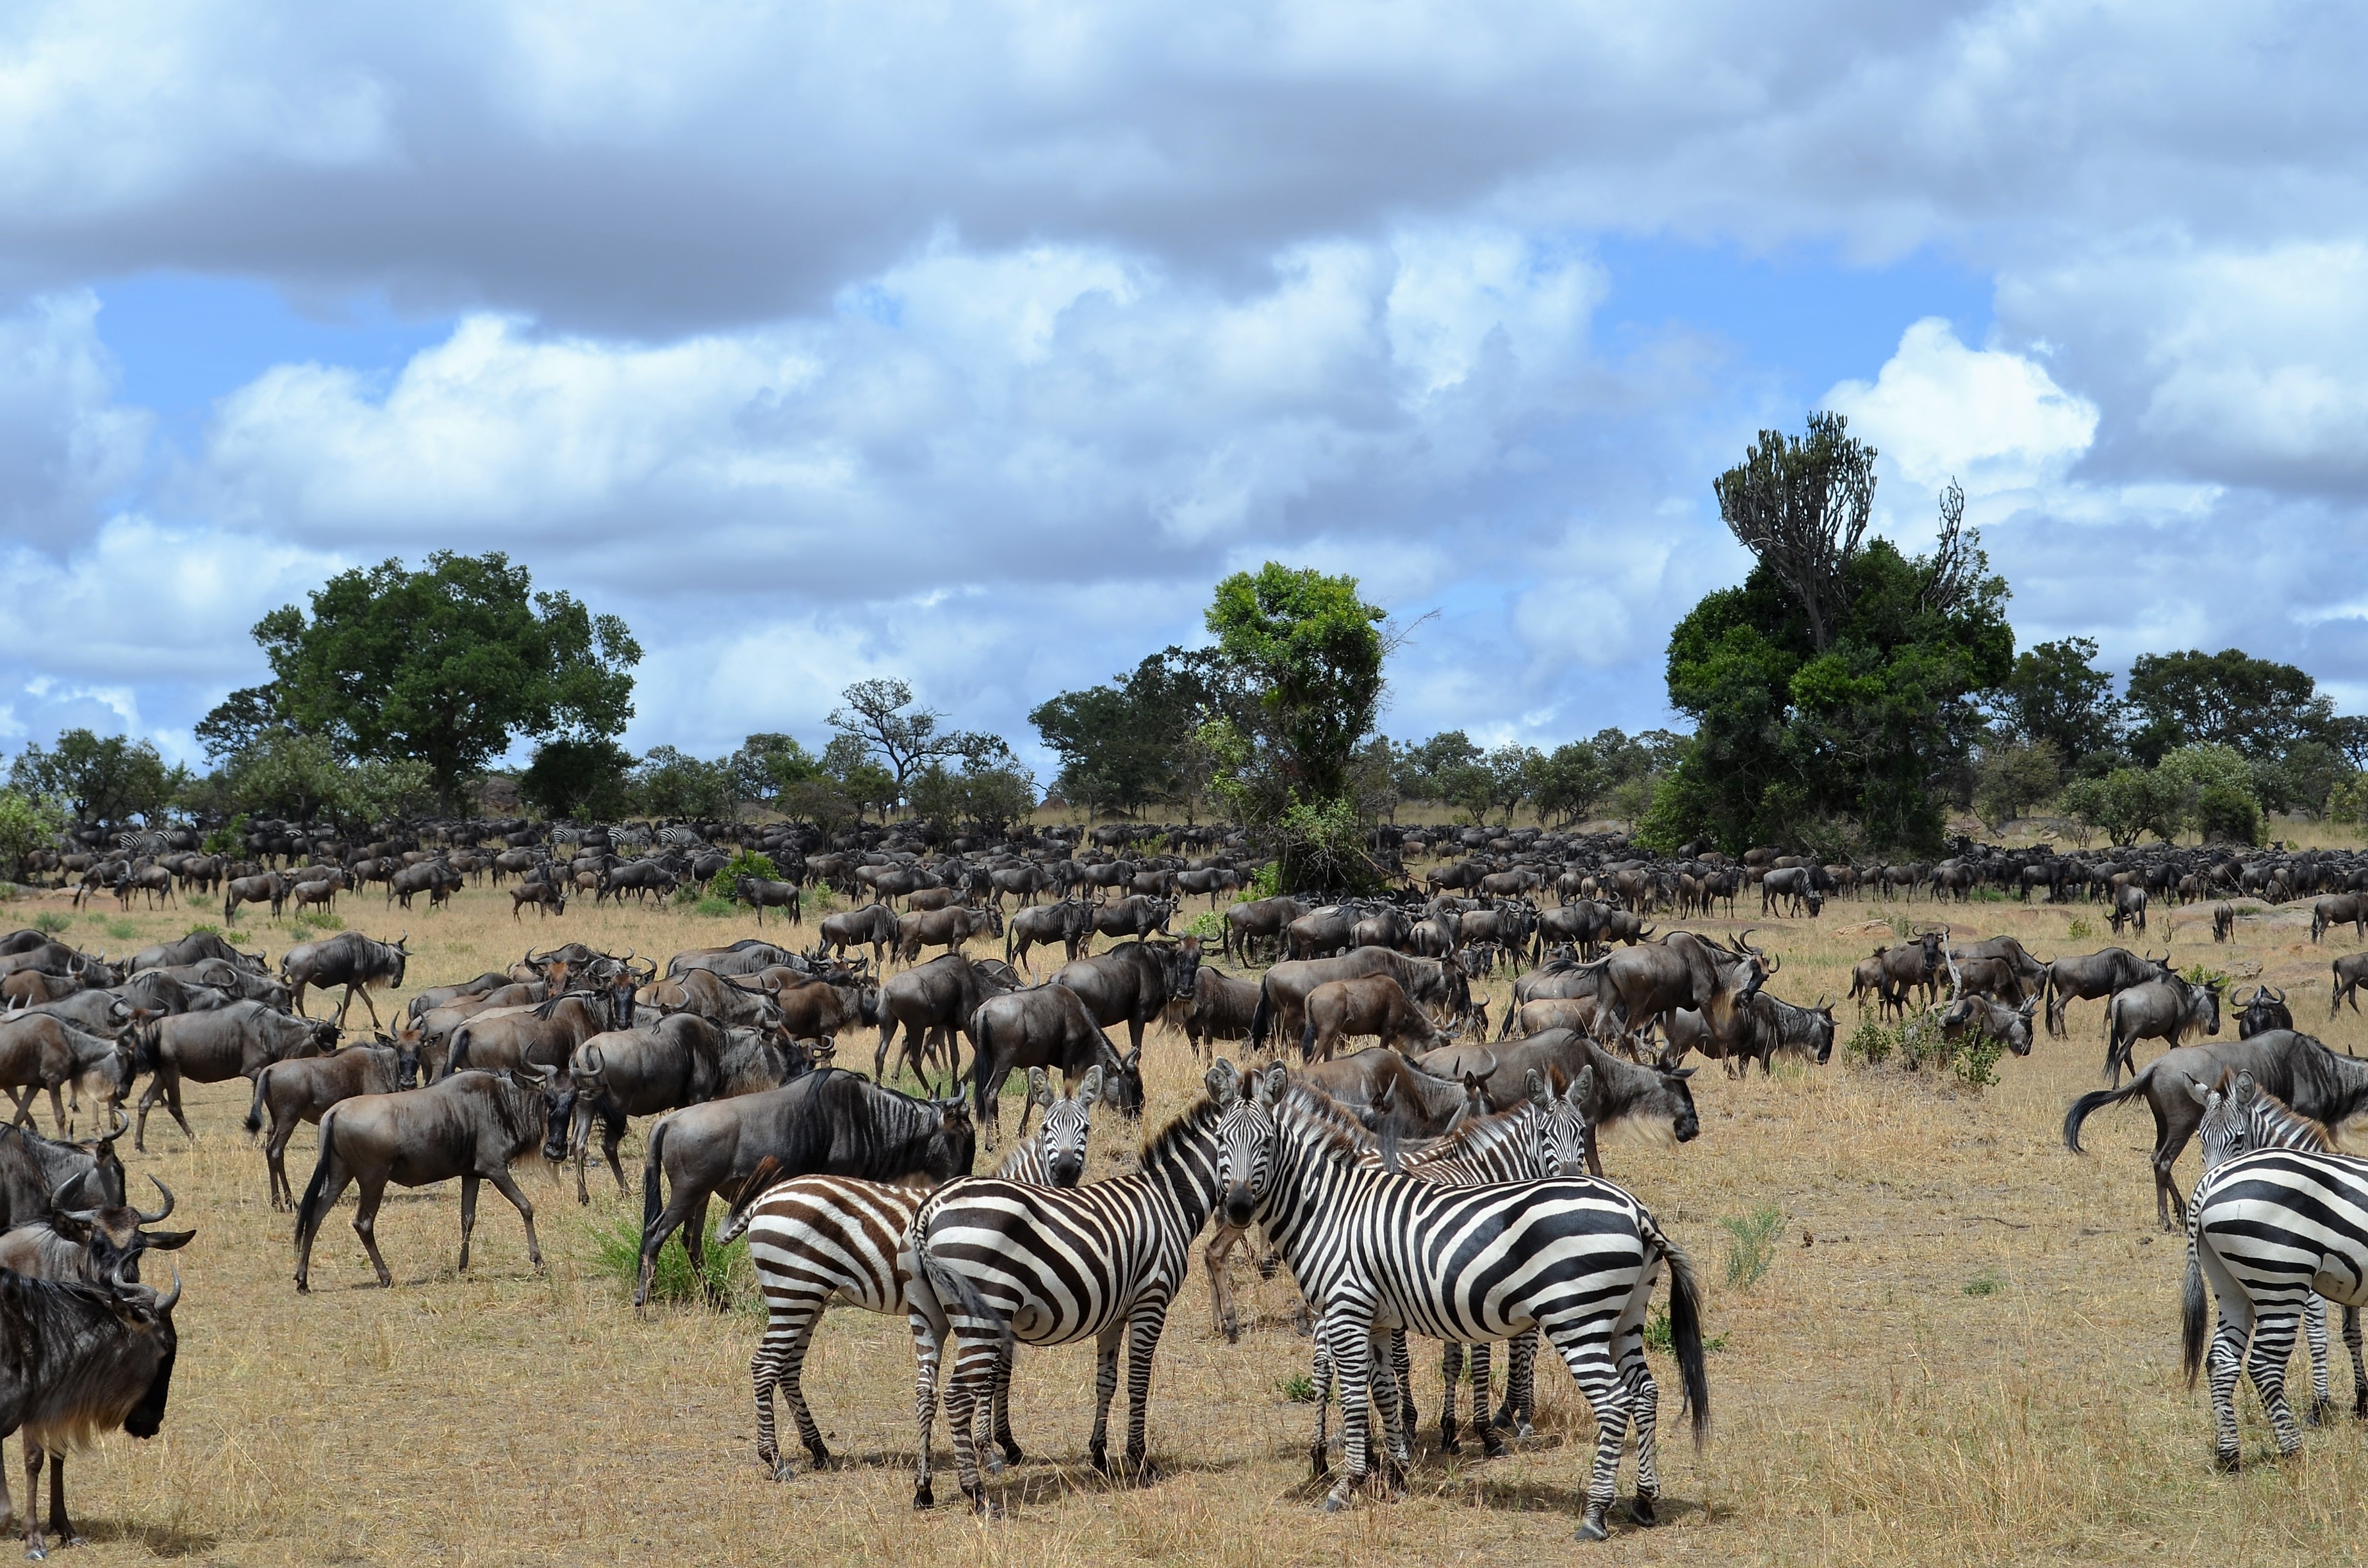 Migrating to the Serengeti